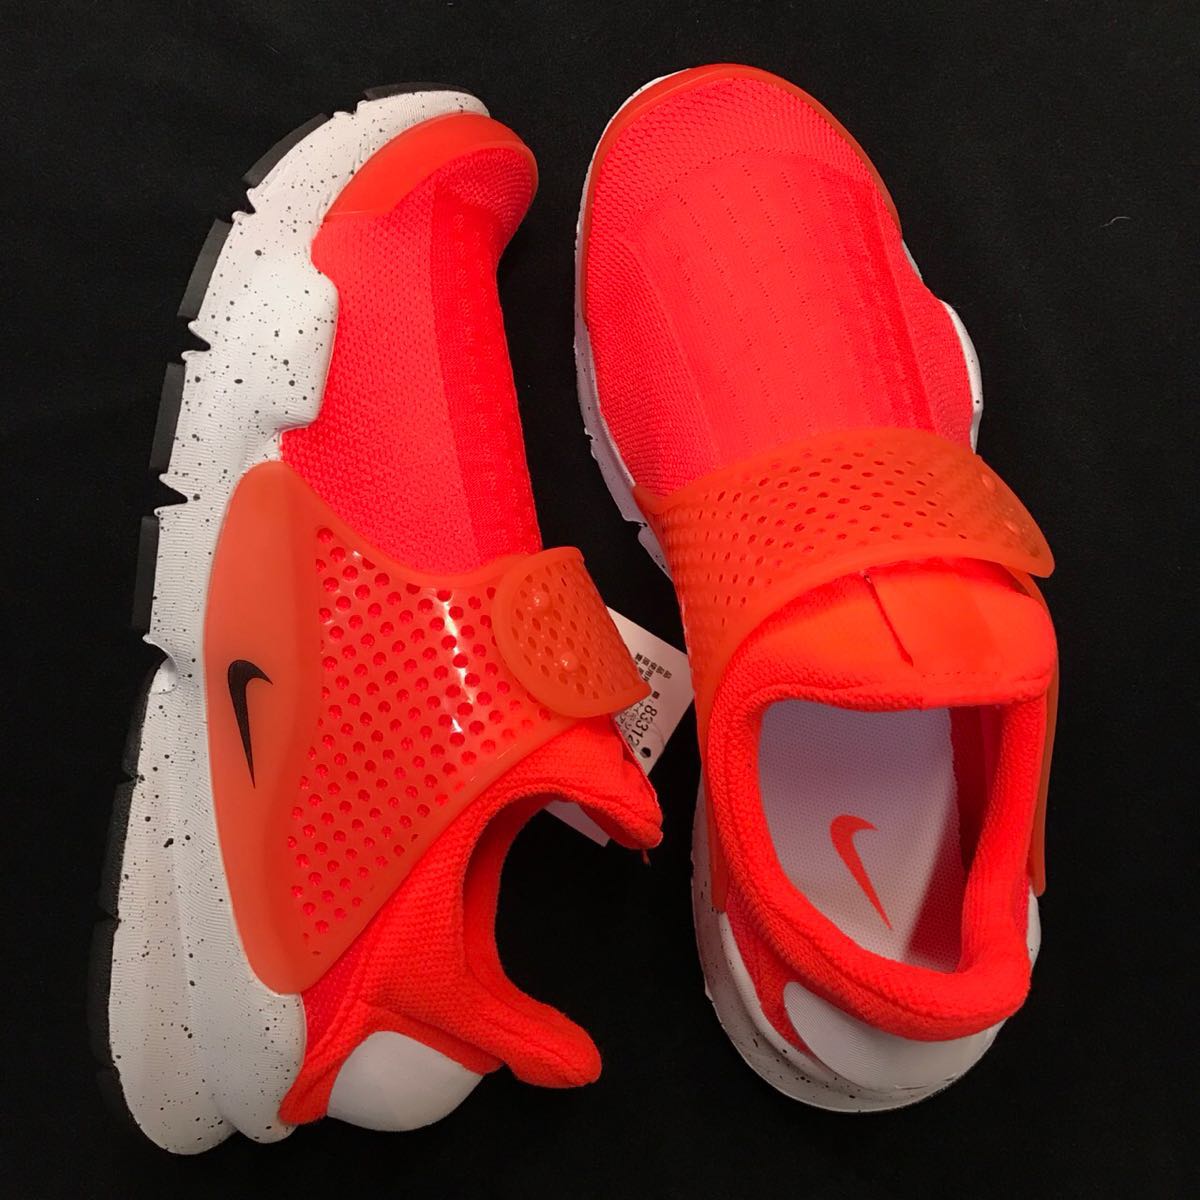 Nike NIKE運動鞋25厘米SOCK DART SE襪子飛鏢橙色女式運動套裝運動型 原文:ナイキ NIKE スニーカー 25センチ SOCK DART SE　ソックダート オレンジ レディース スリップオン ランニング スポーティー